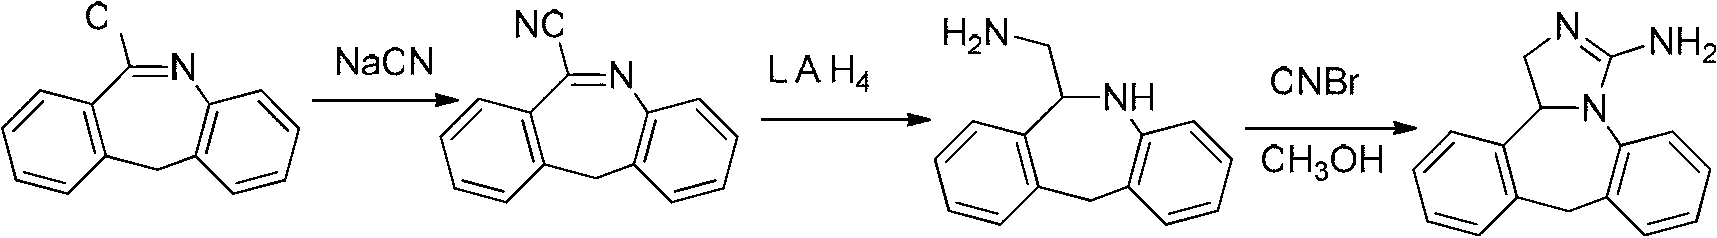 Synthesis method of epinastine